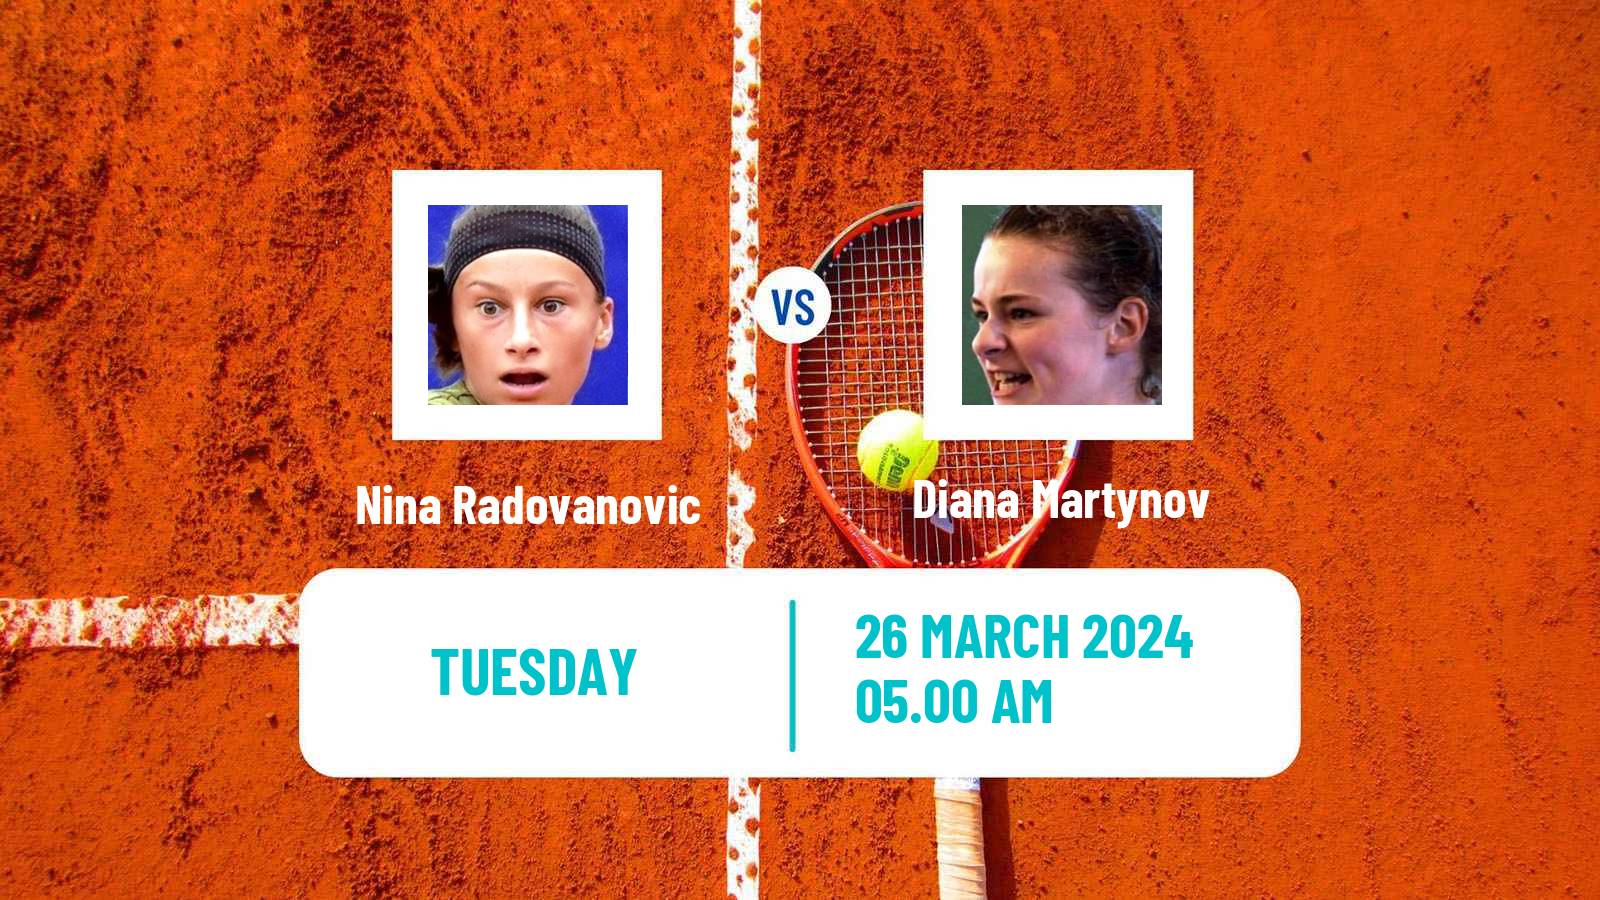 Tennis ITF W75 Croissy Beaubourg Women Nina Radovanovic - Diana Martynov